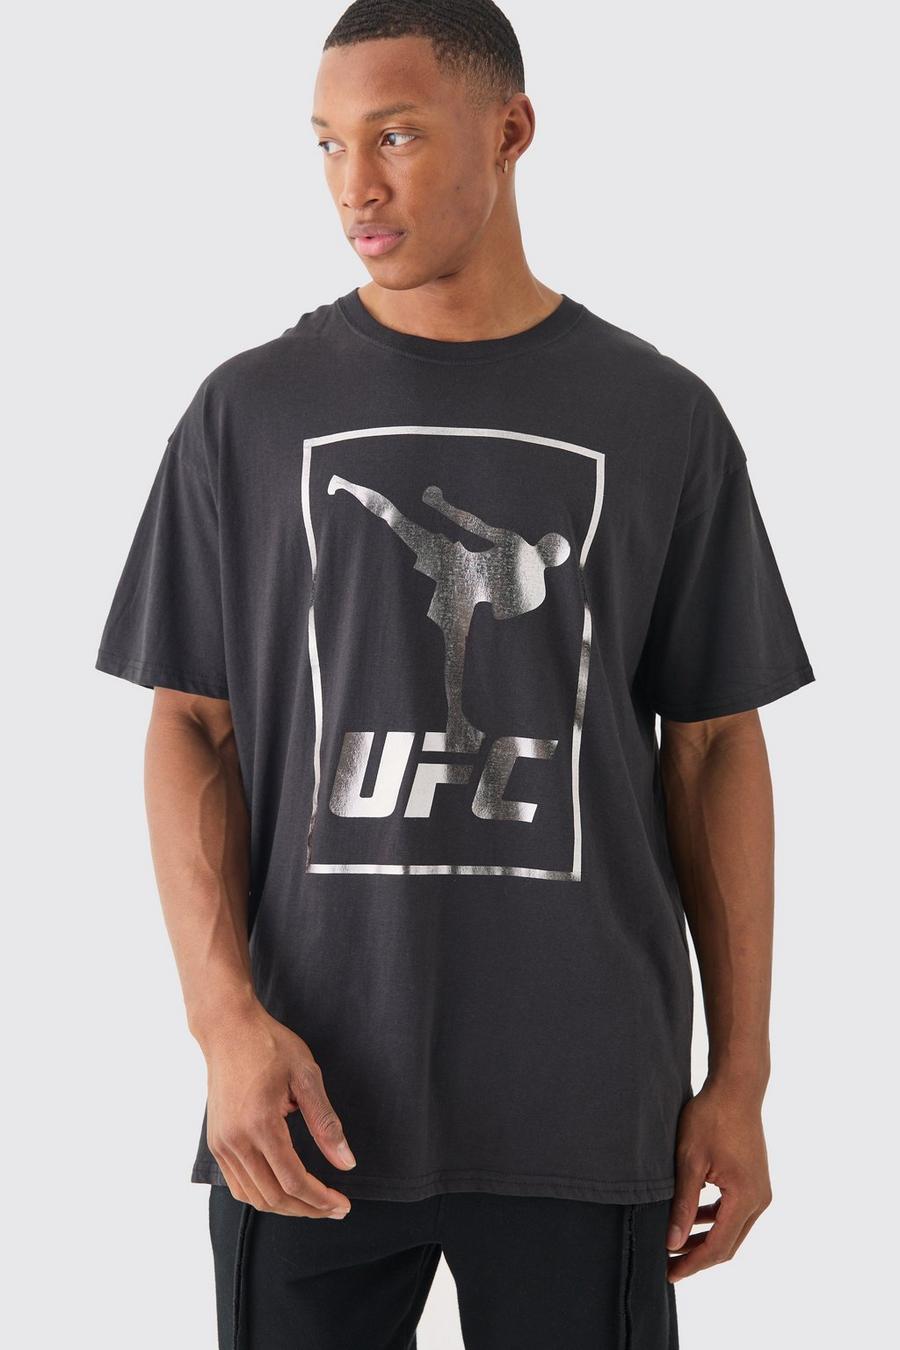 T-shirt oversize ufficiale UFC, Black